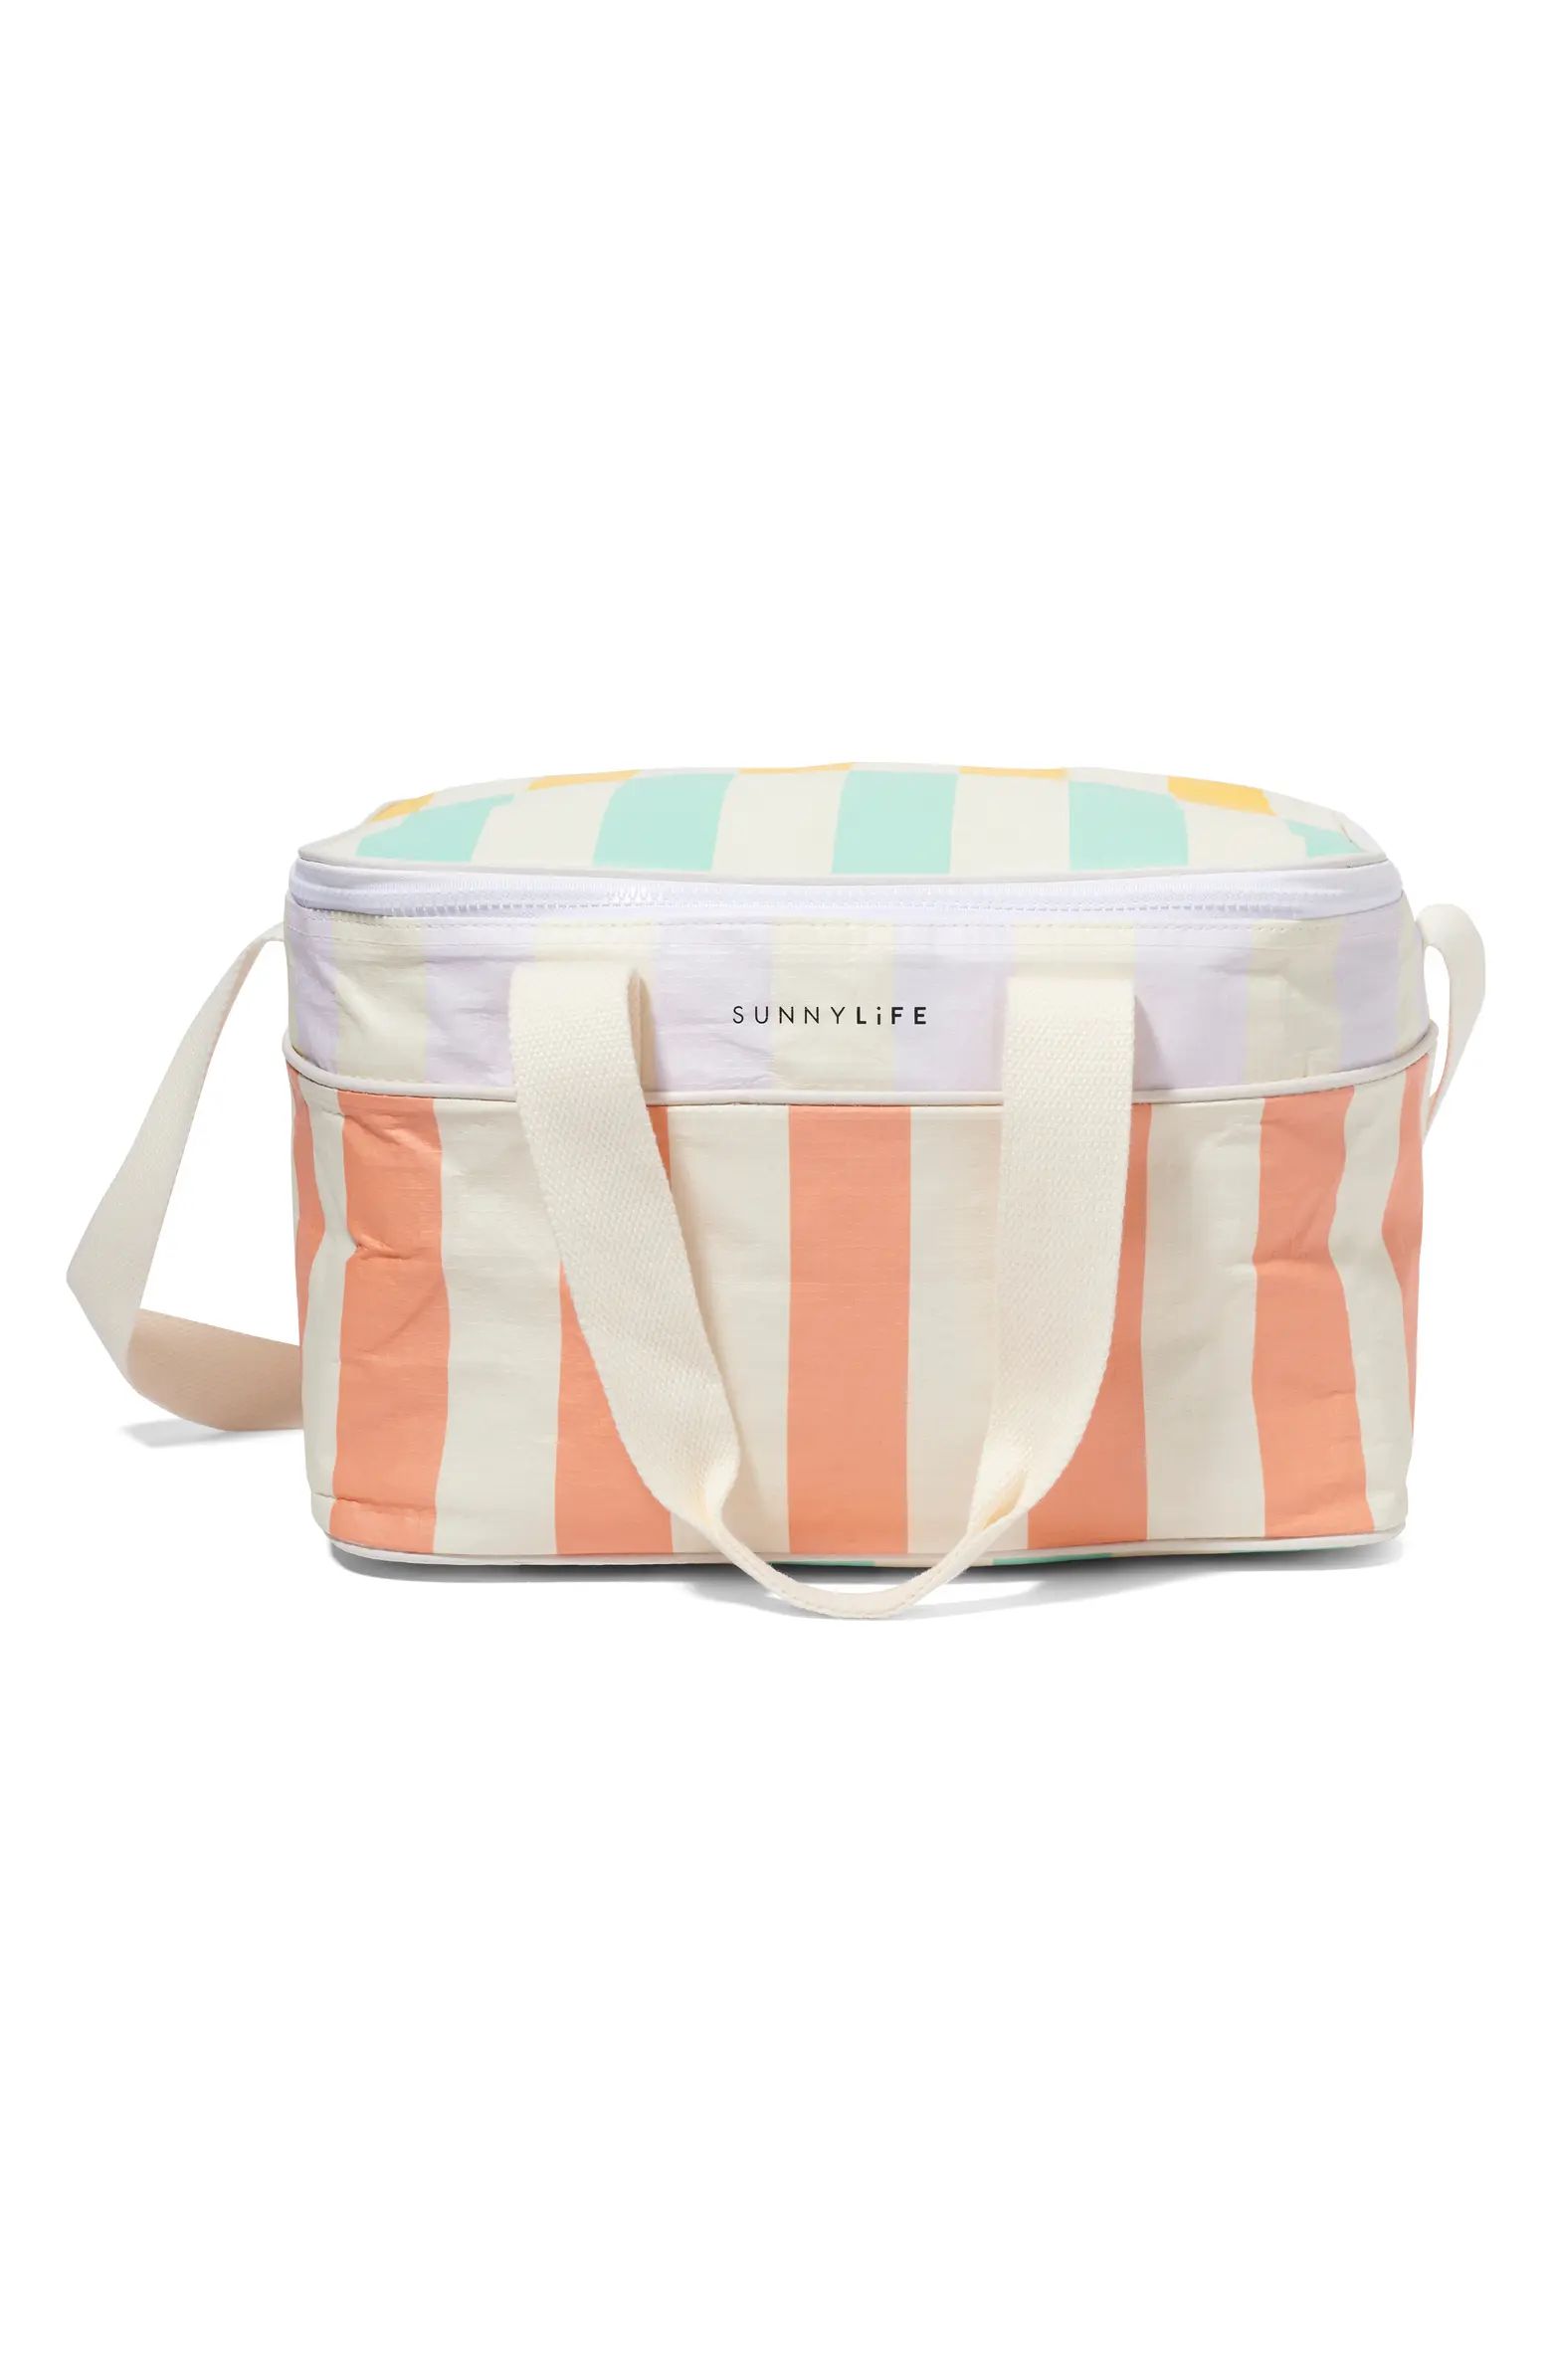 Sunnylife Rio Sun Insulated Cooler Bag | Nordstrom | Nordstrom